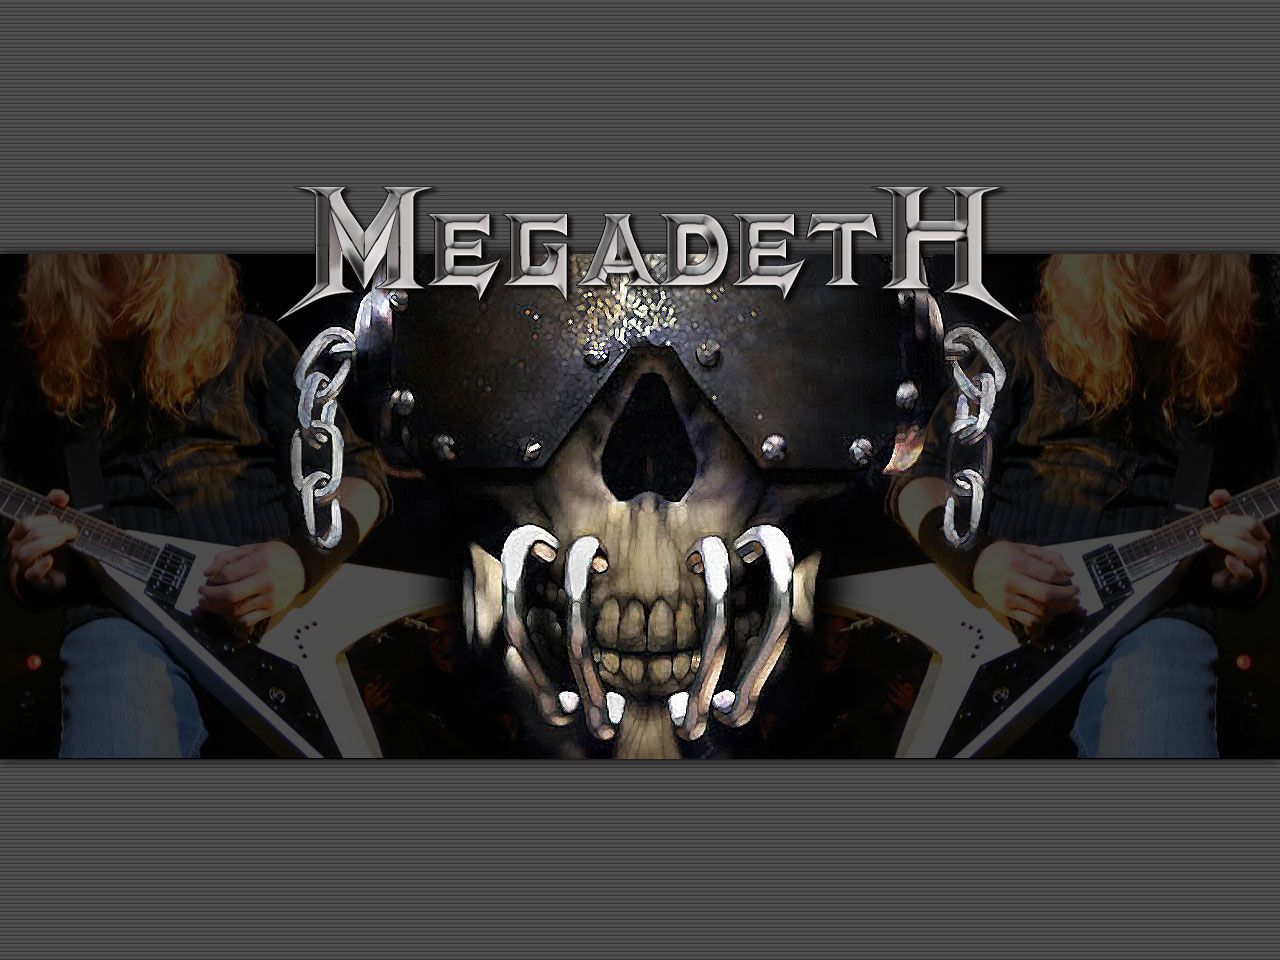 Megadeth Computer Wallpapers, Desktop Backgrounds | 1280x960 | ID ...